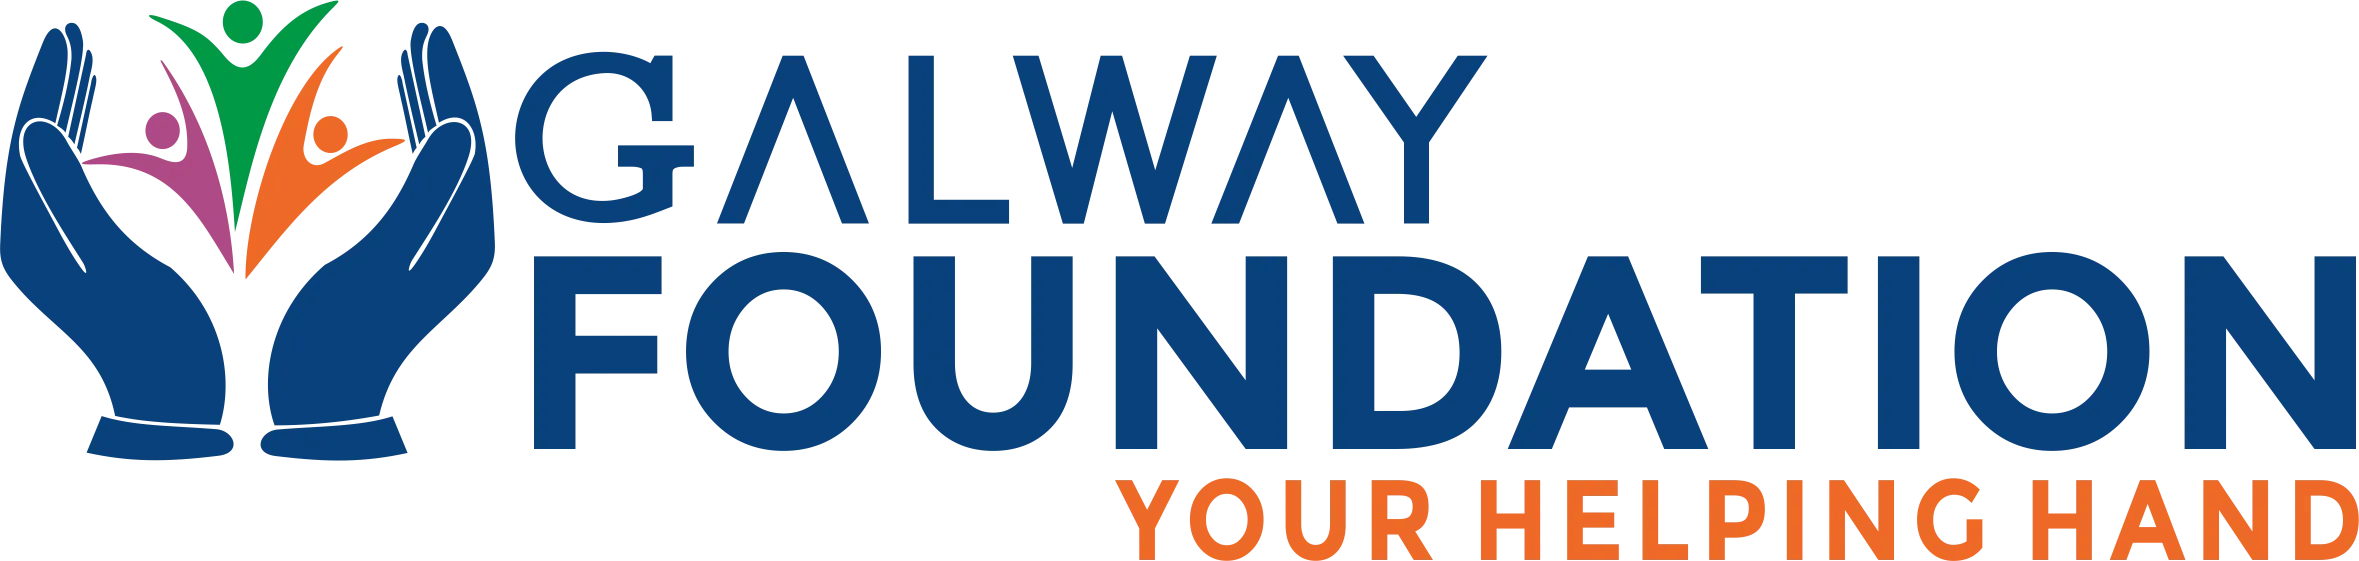 Galway Foundation